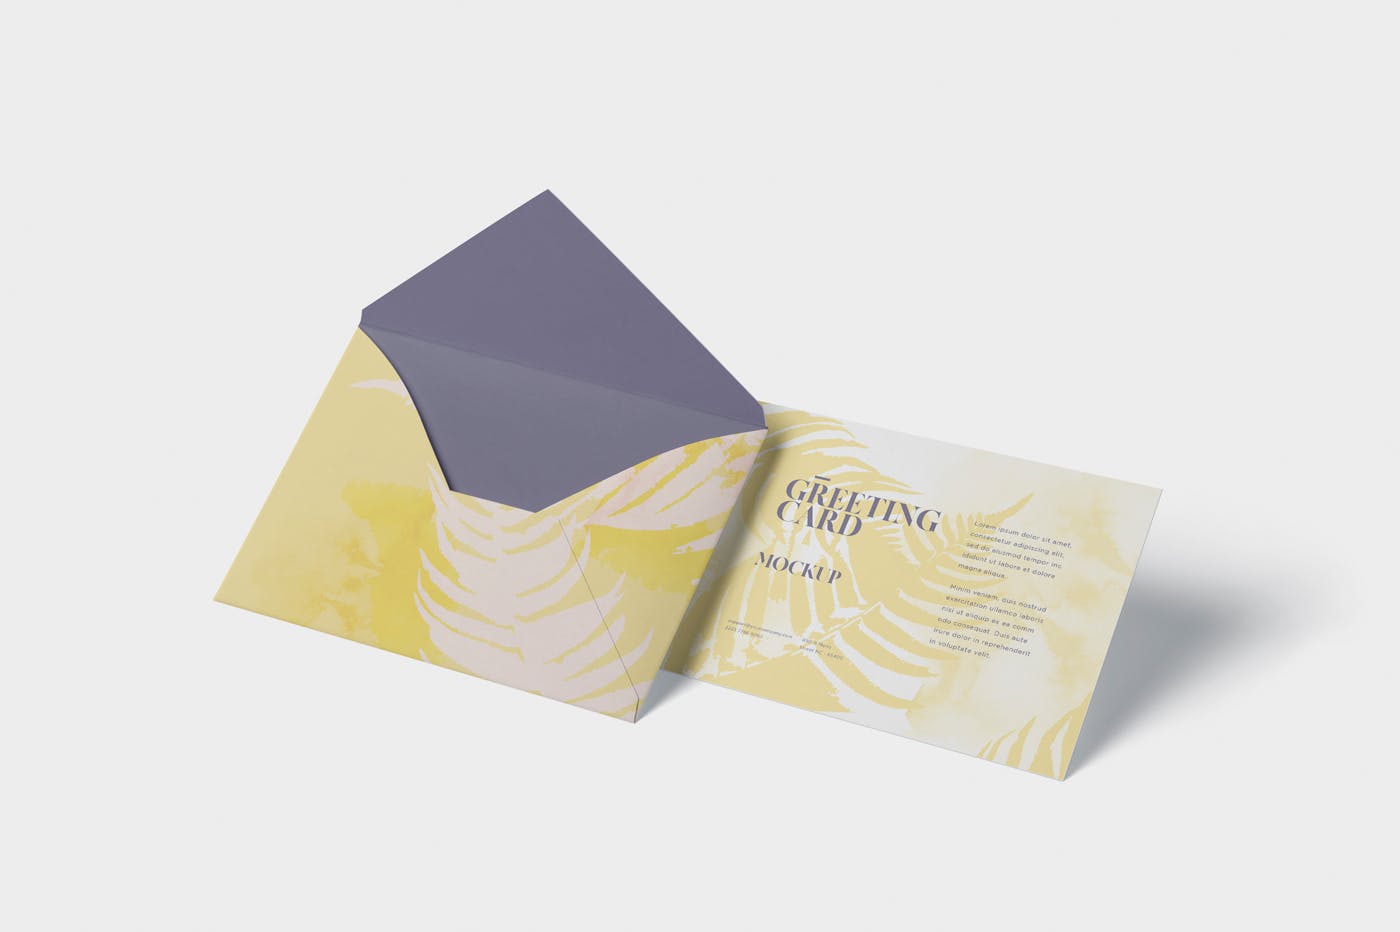 高端企业信封&贺卡设计图第一素材精选 Greeting Card Mockup with Envelope – A6 Size插图(2)